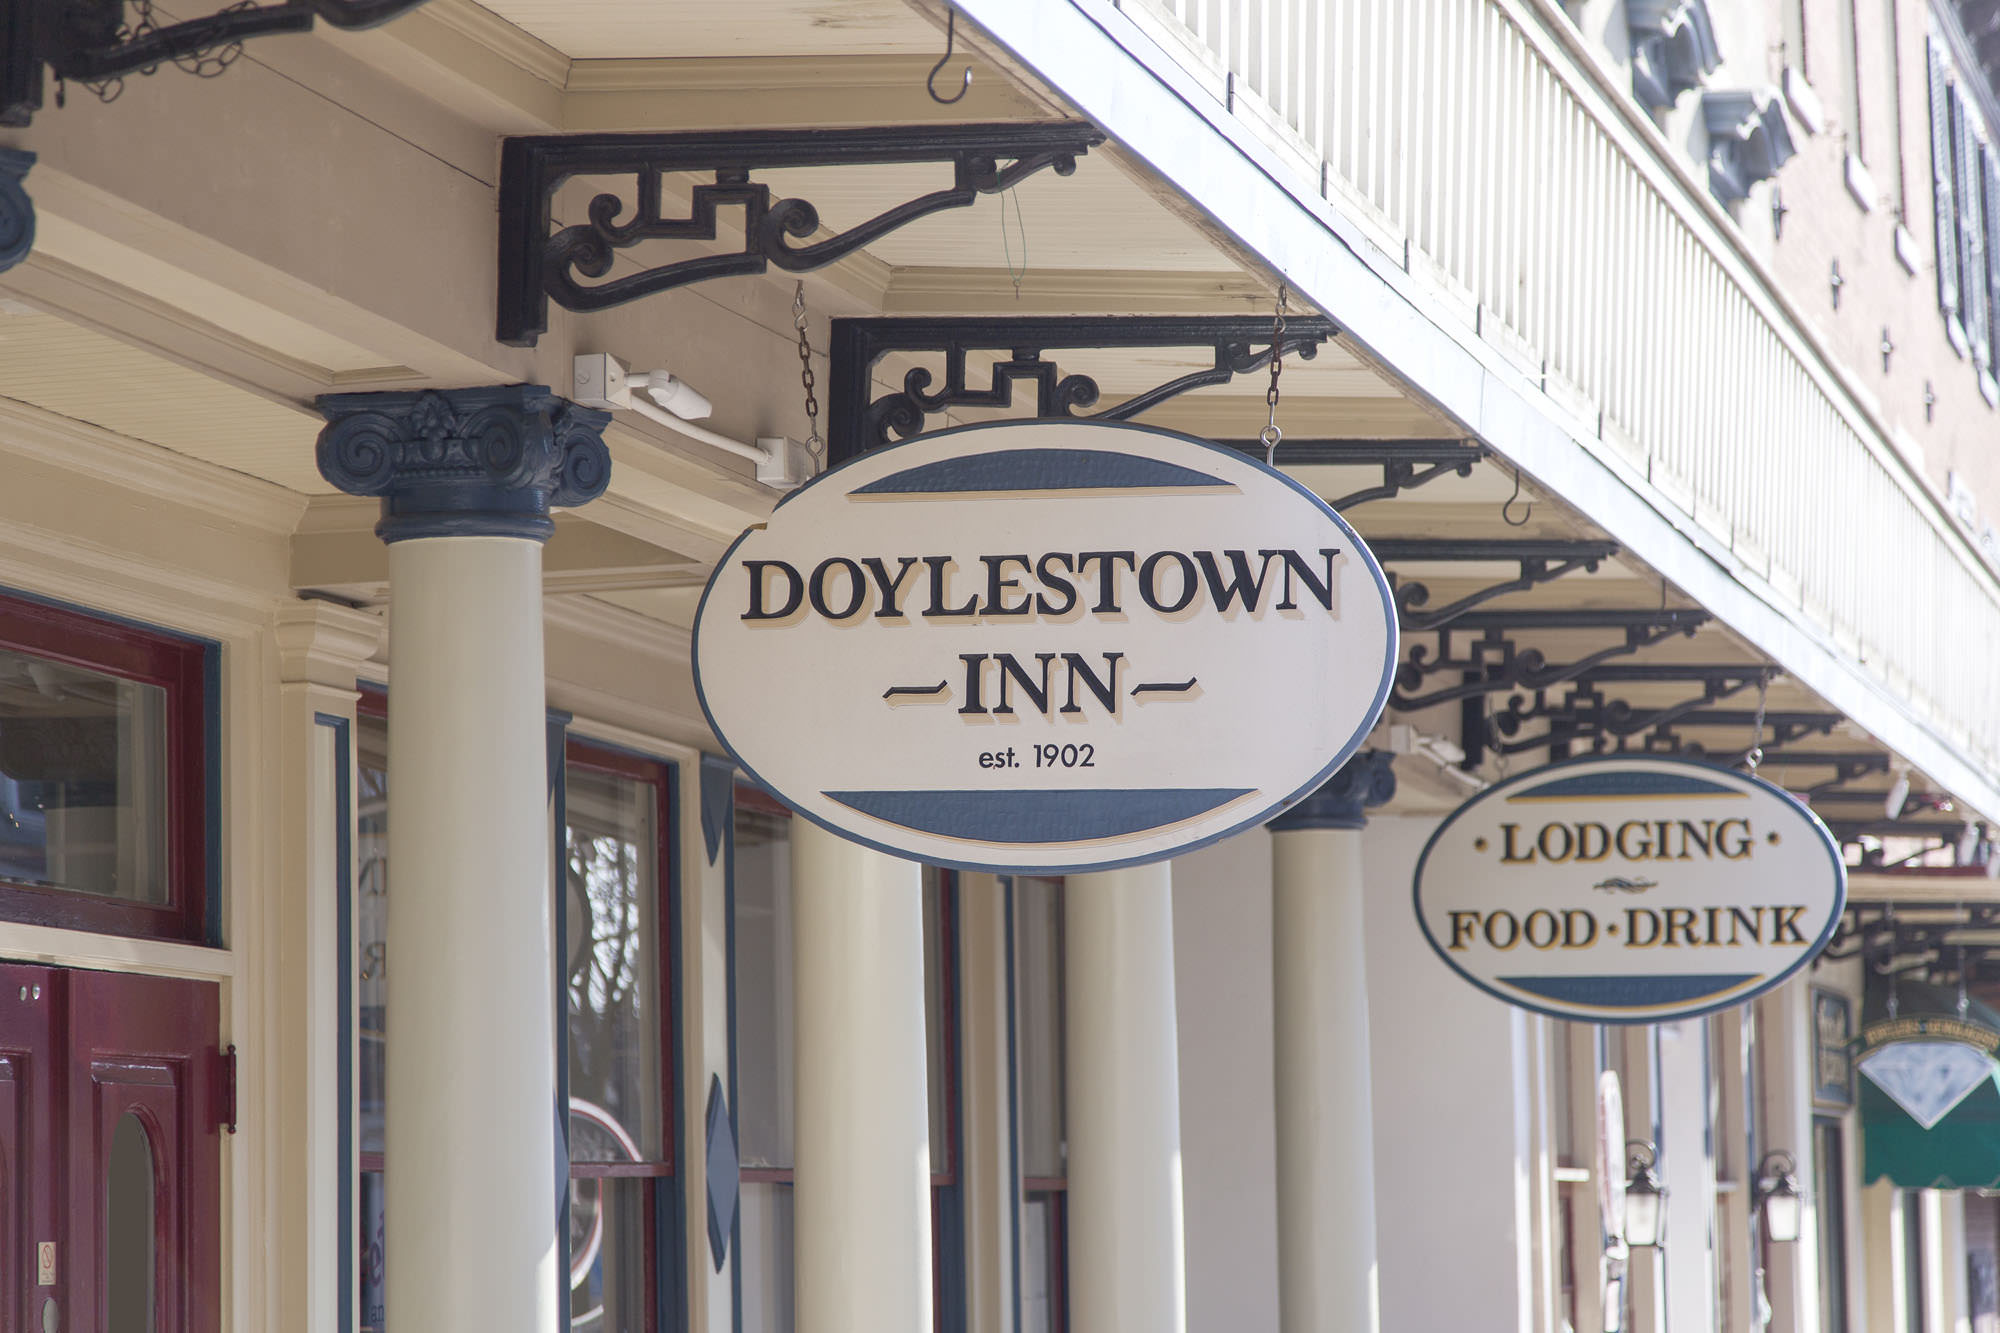 Doylestown Inn Sign, Doylestown Inn